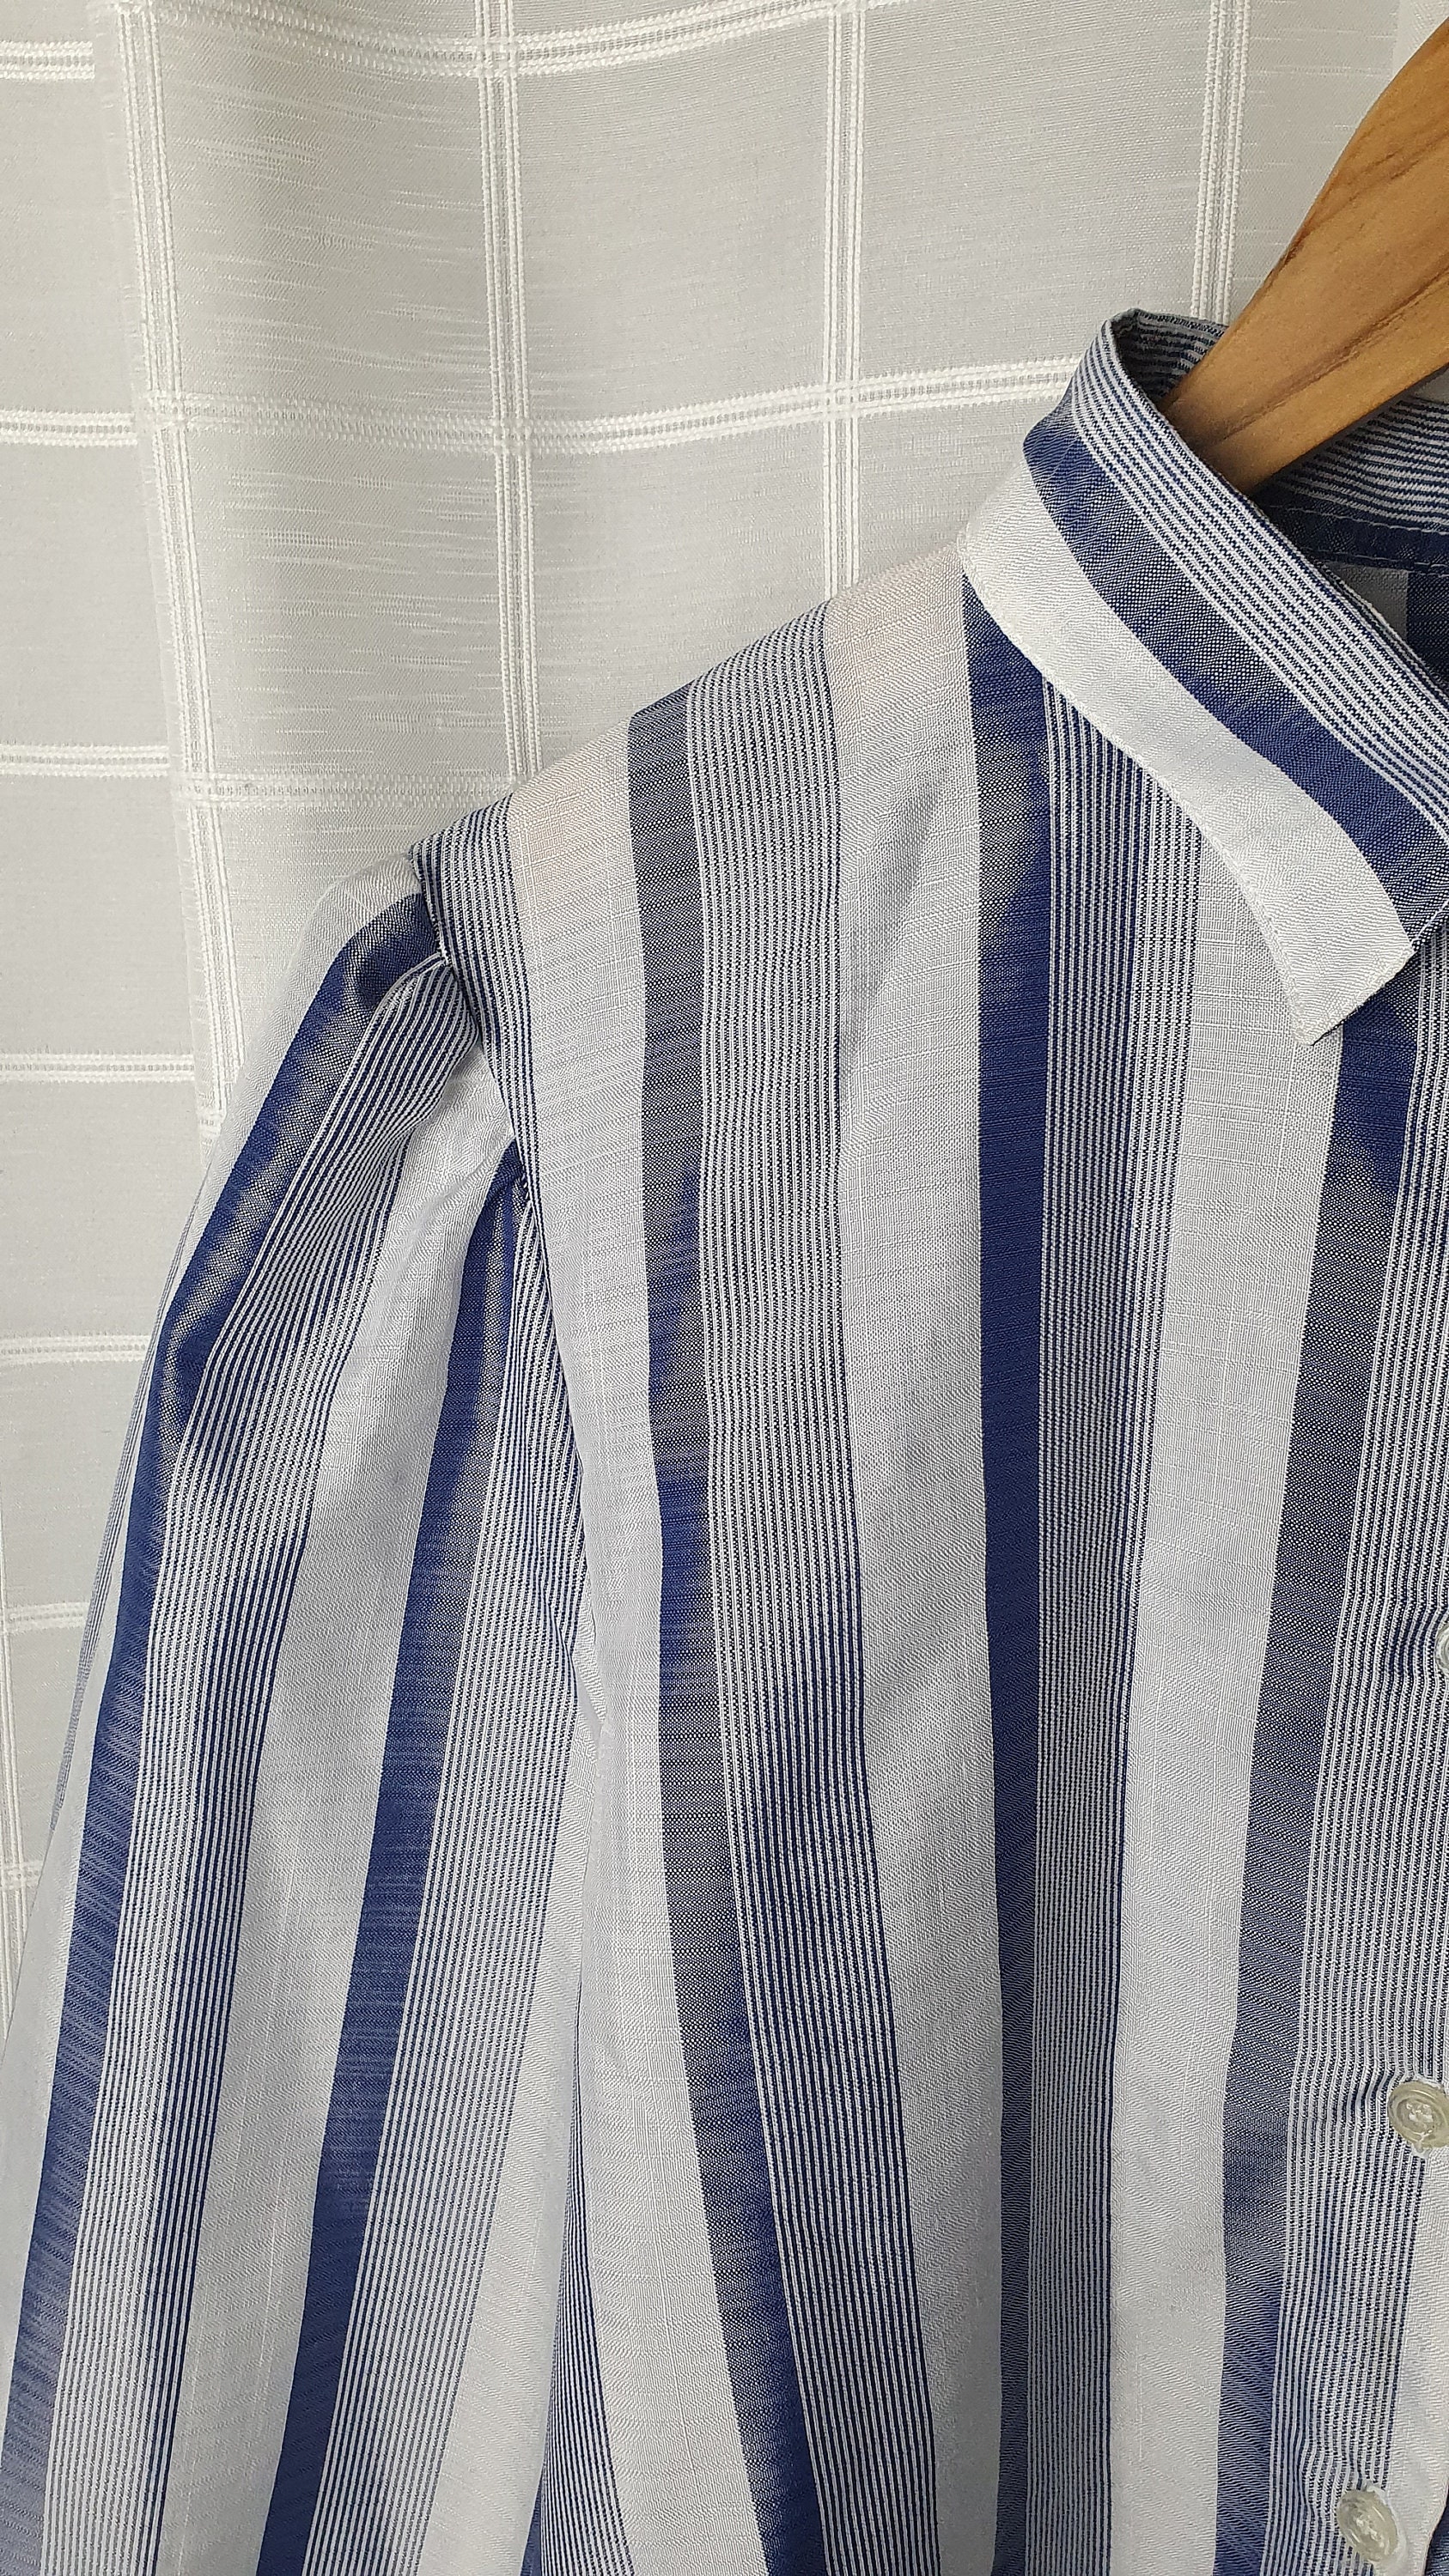 Vintage 1940s 1950s style striped pattern white blue wide | Etsy